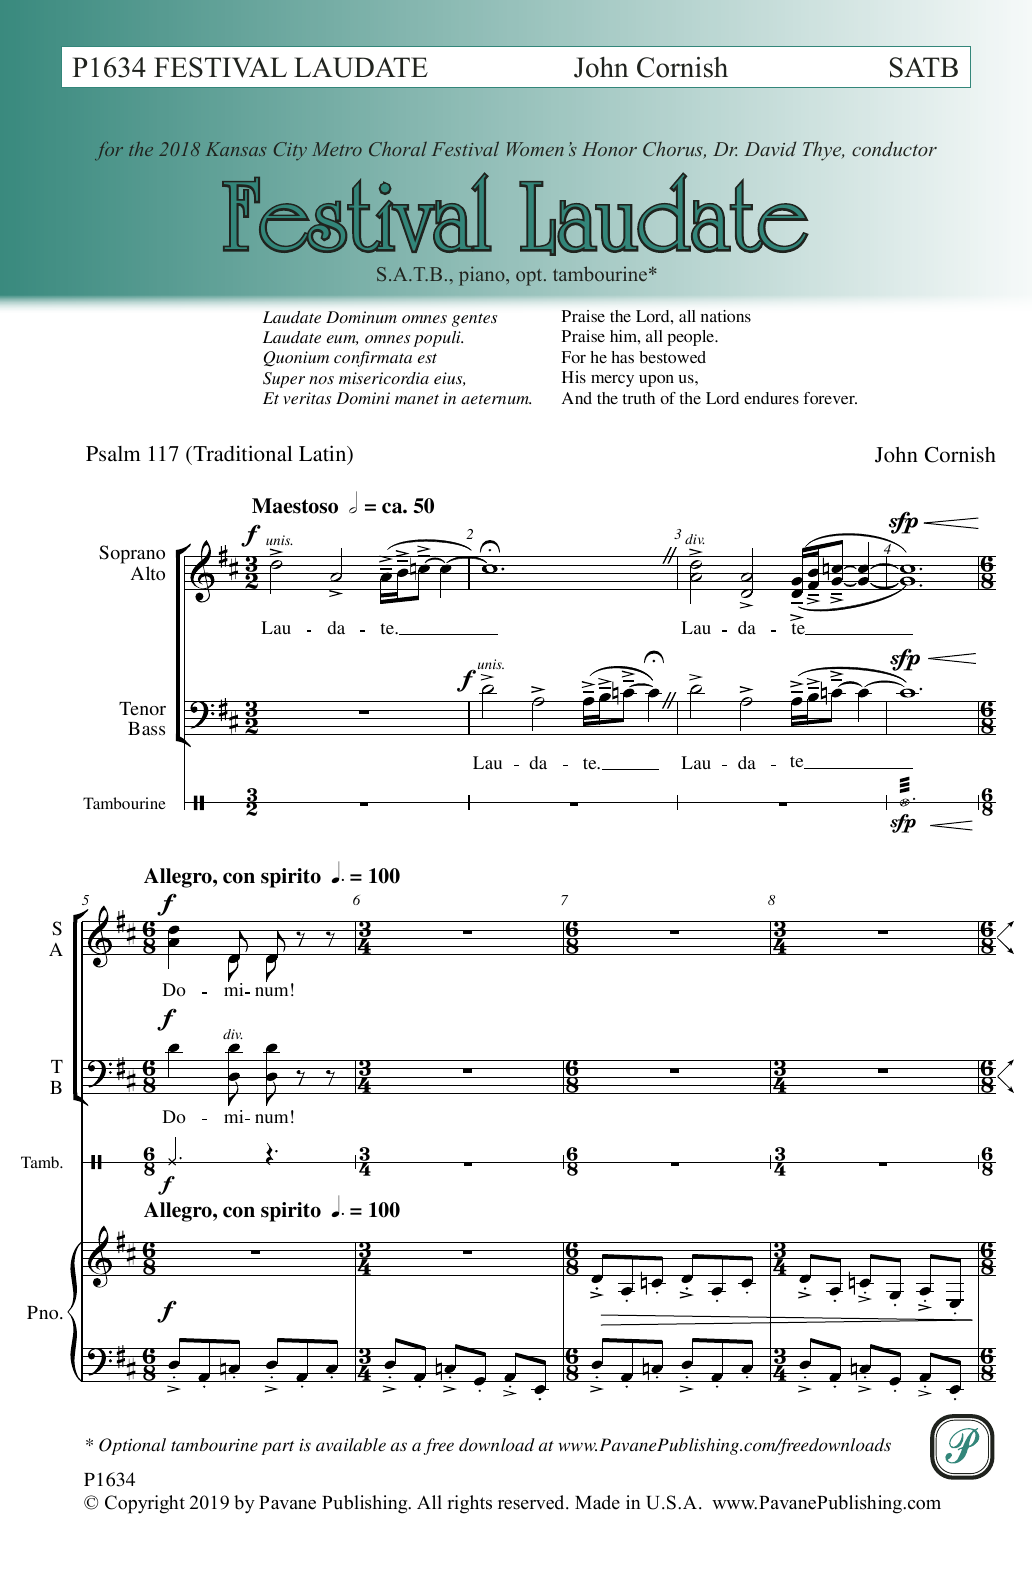 John Cornish Festival Laudate Sheet Music Notes & Chords for SATB Choir - Download or Print PDF